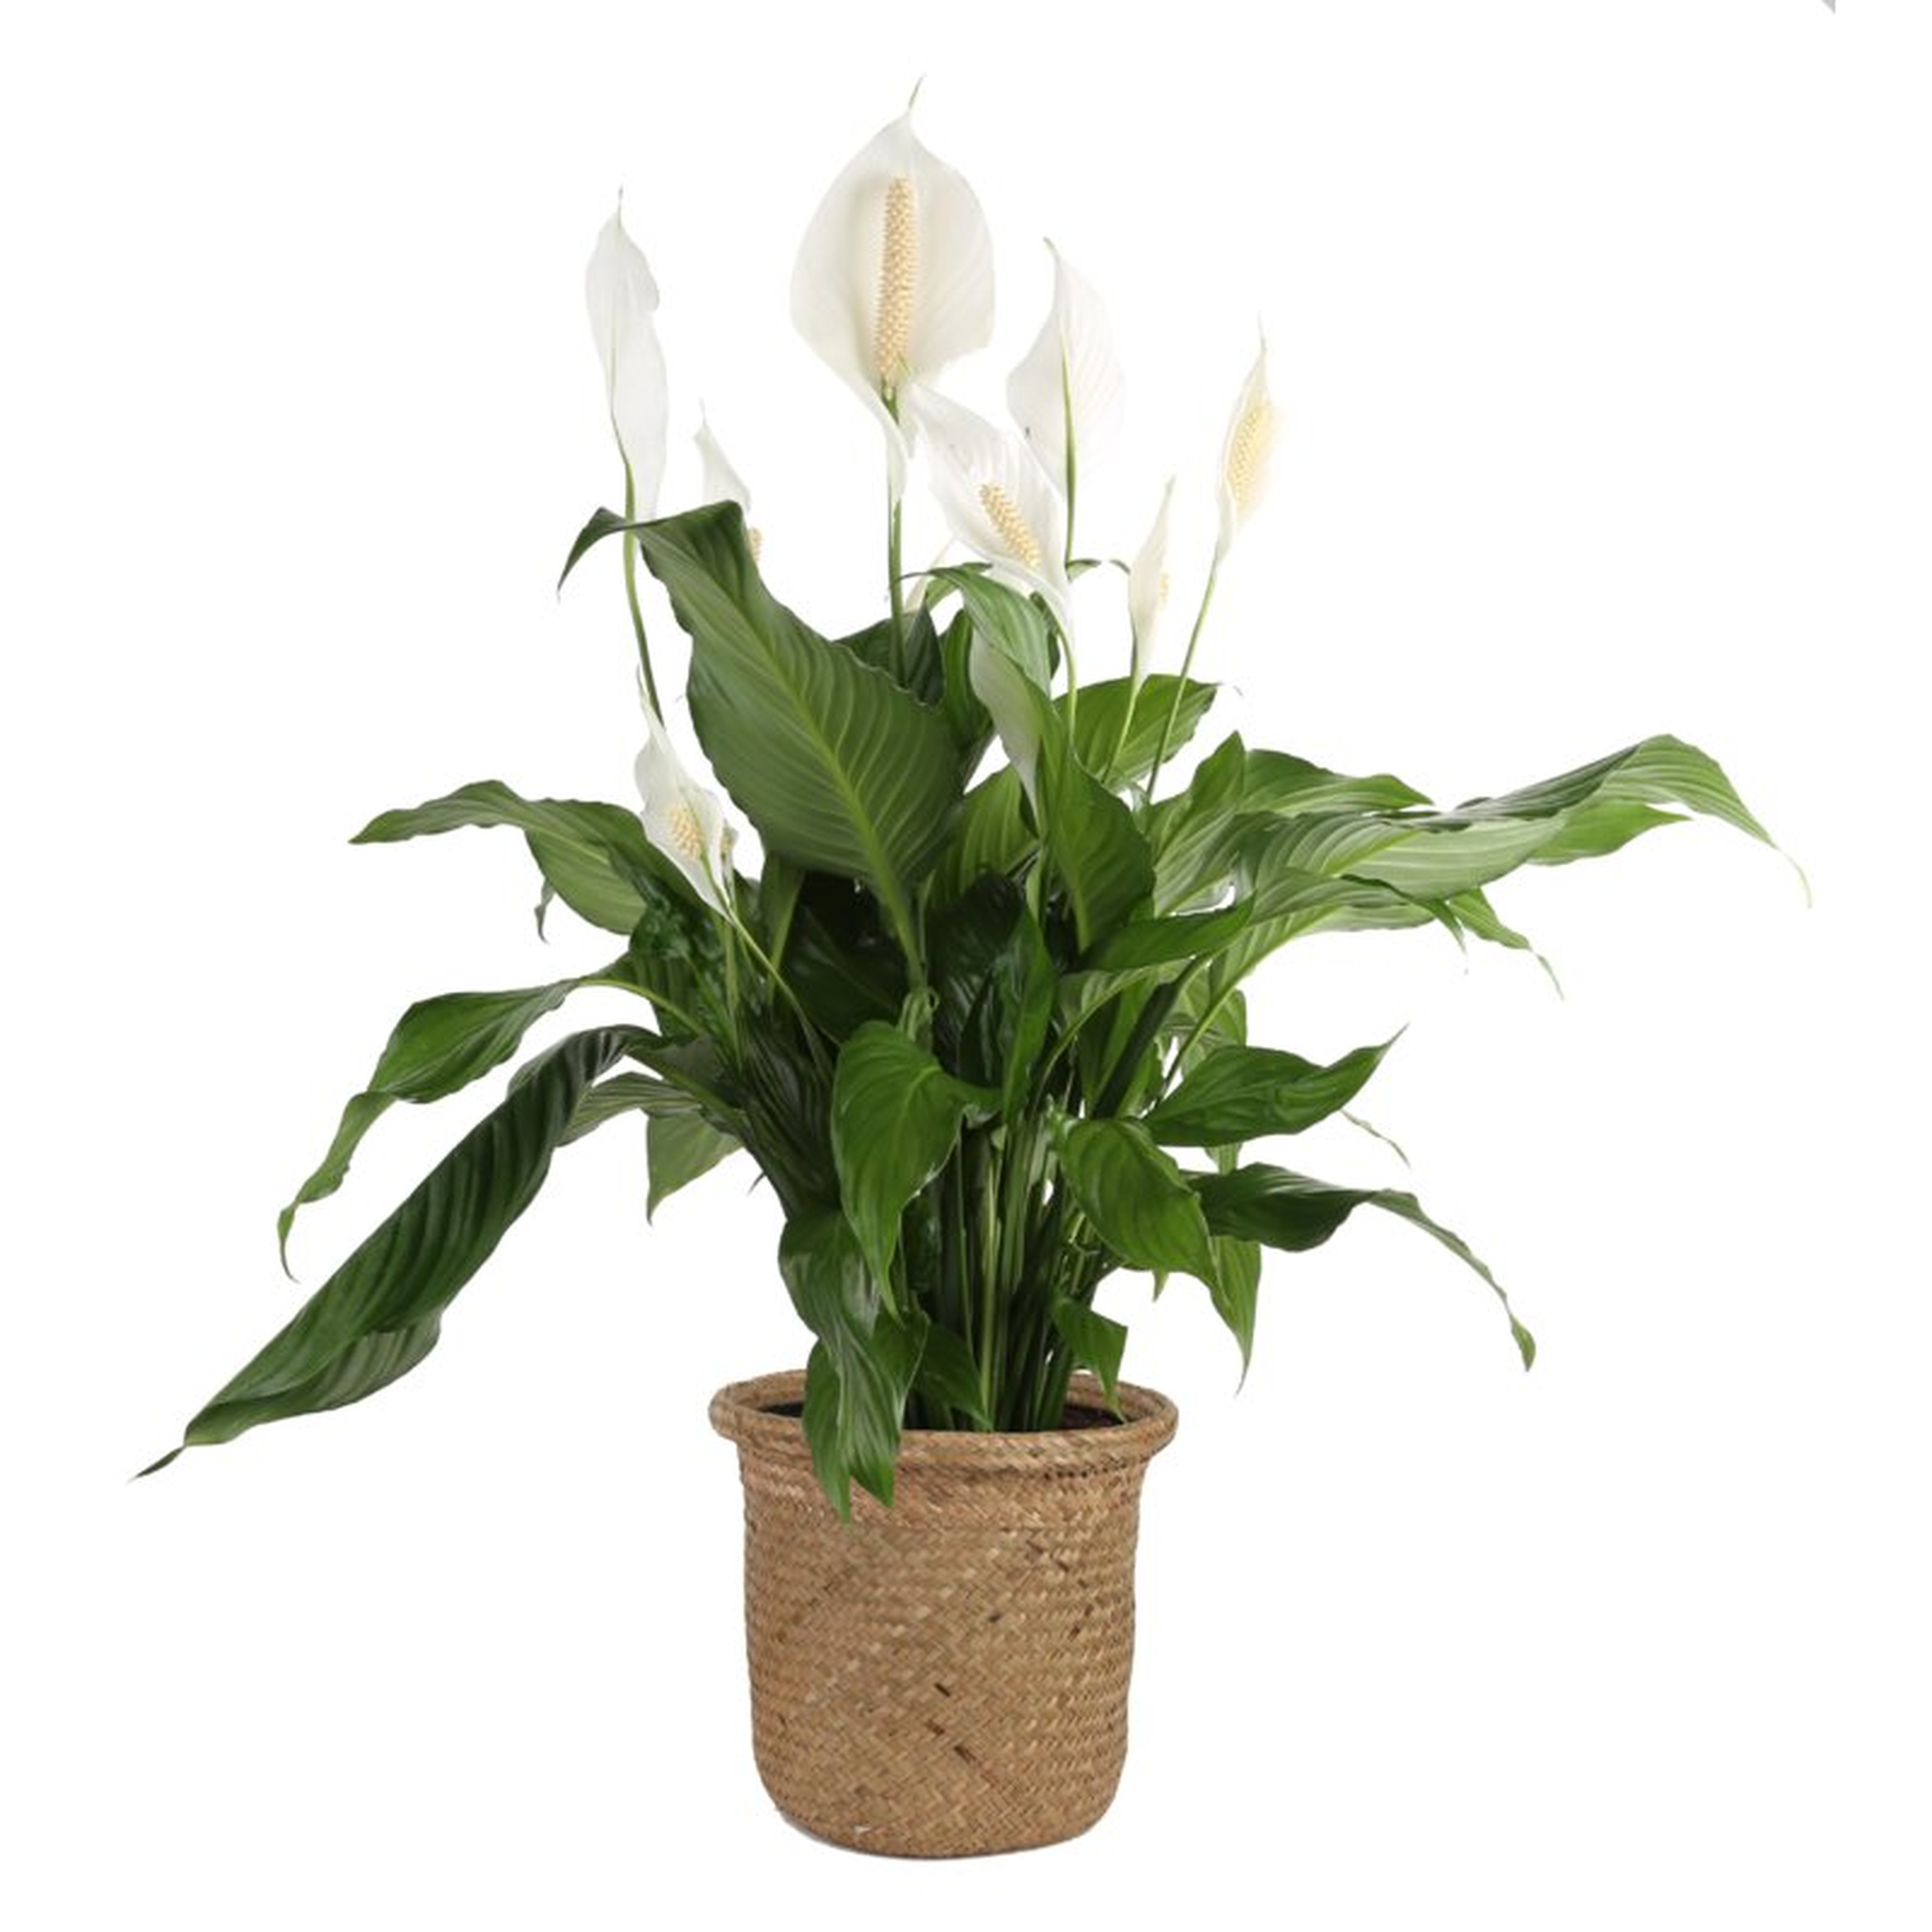 Costa Farms Peace Lily Plant in Basket - Perigold